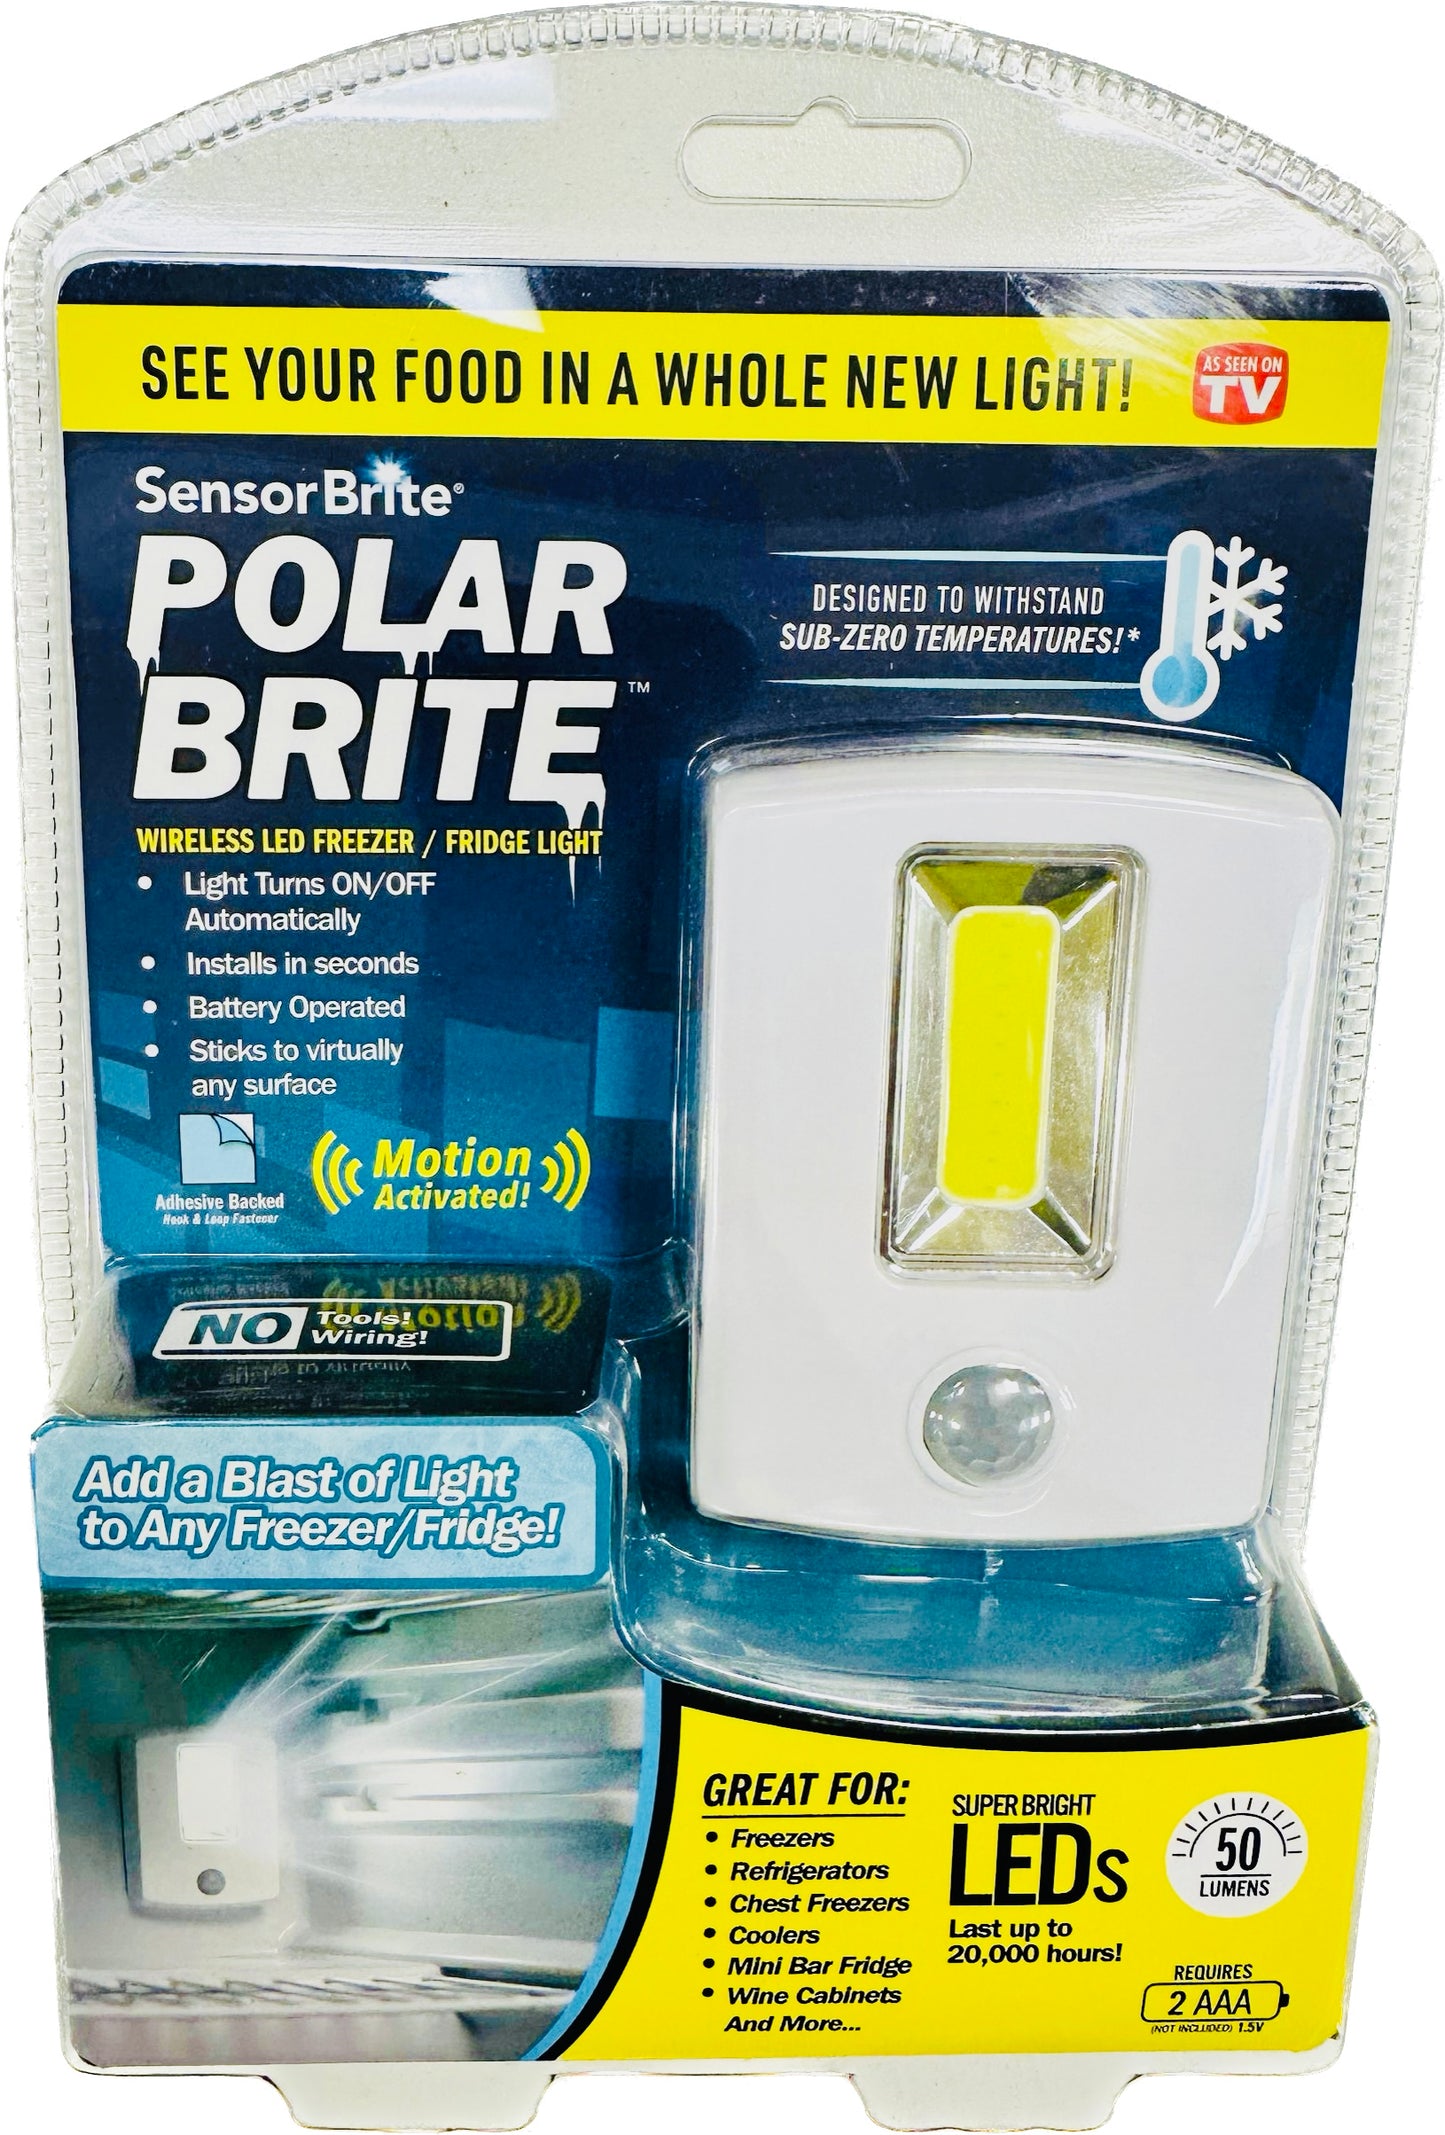 Sensor Brite Polar Brite Wireless Freezer/Fridge Light